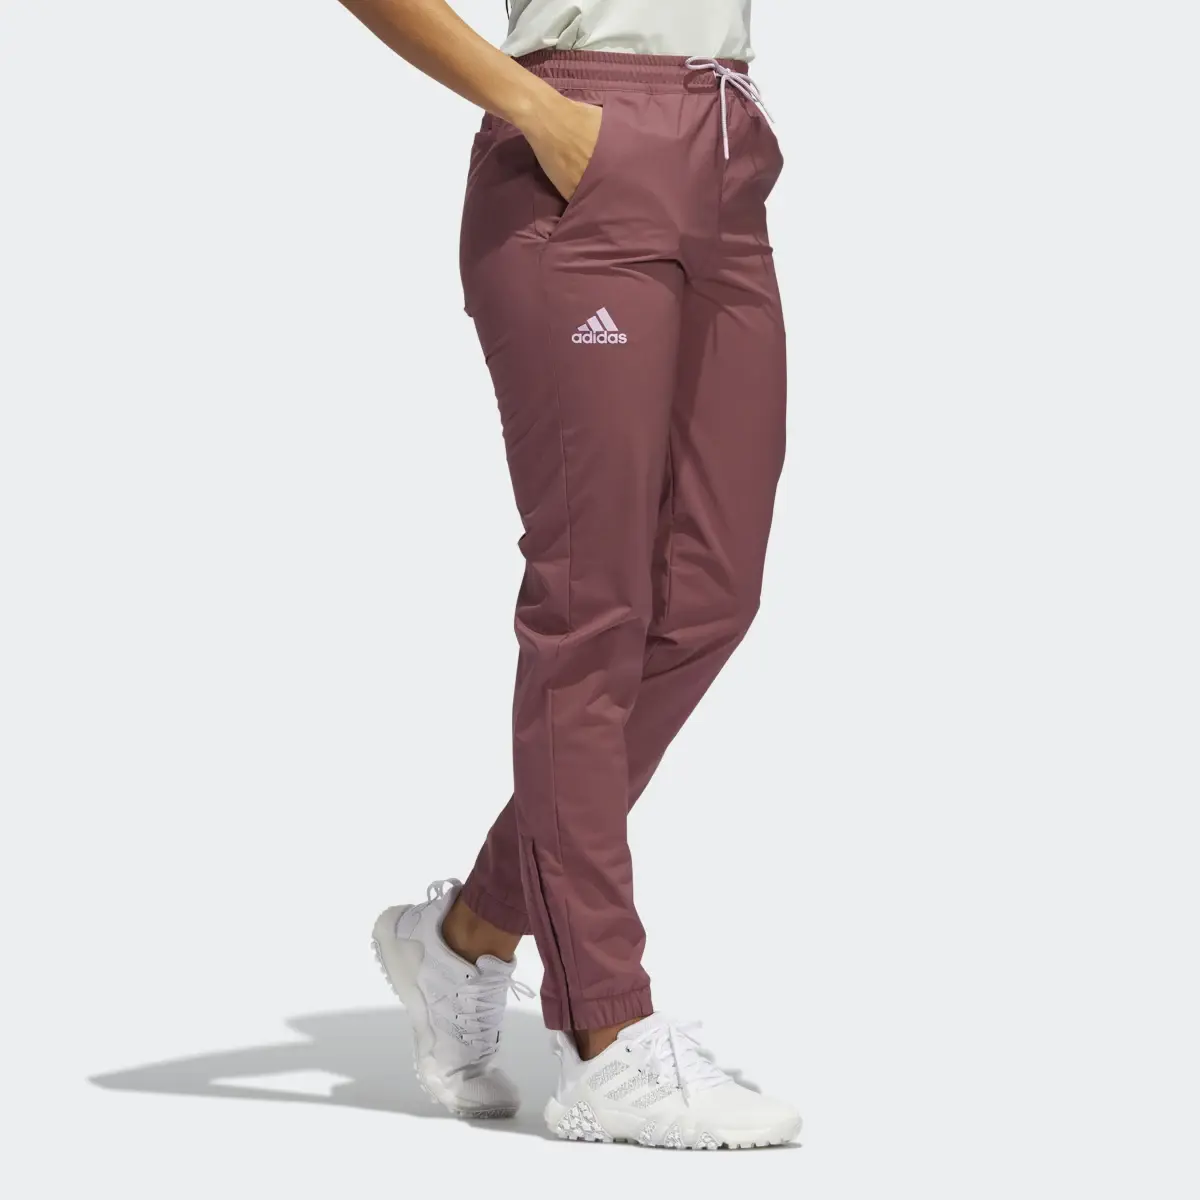 Adidas Provisional Pants. 3